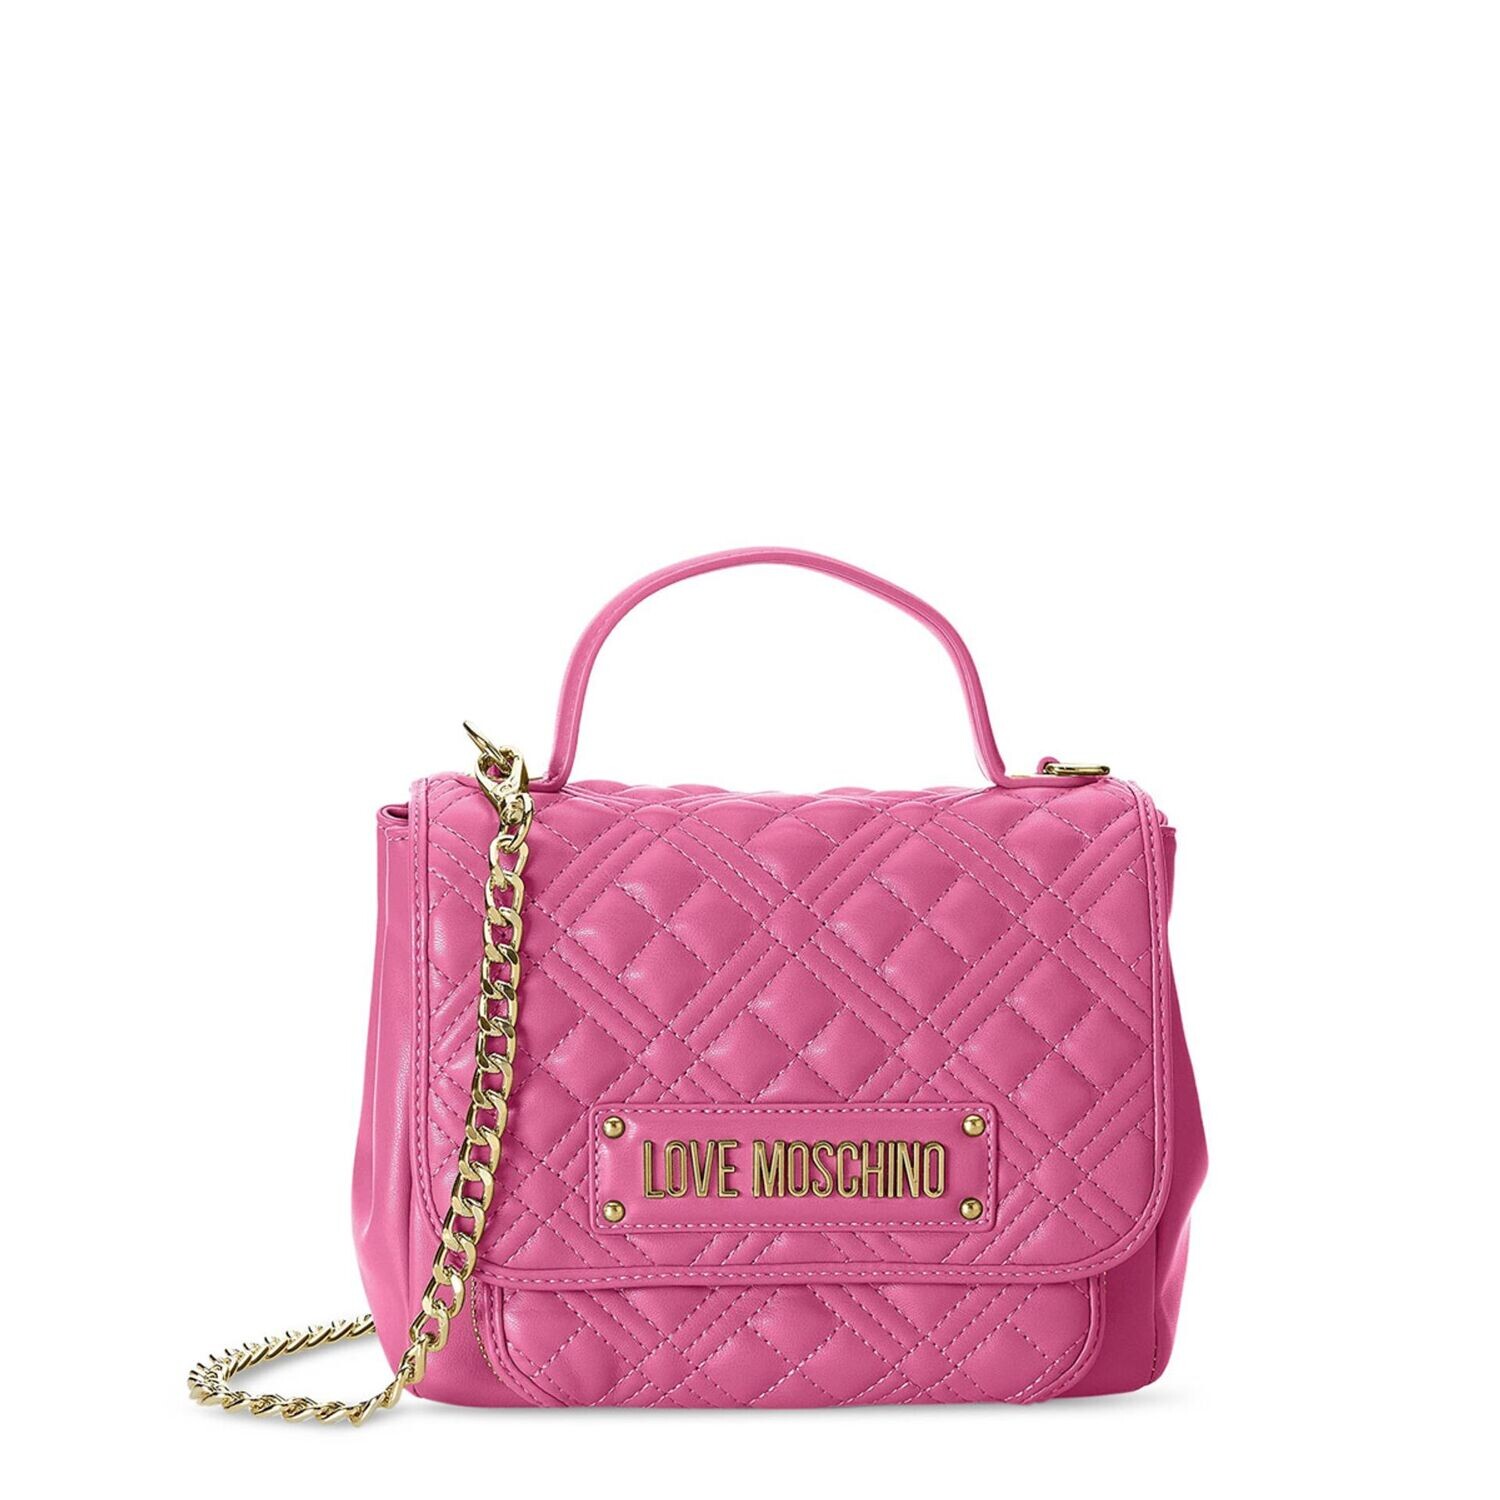 Love Moschino Pink Patterned Handbag